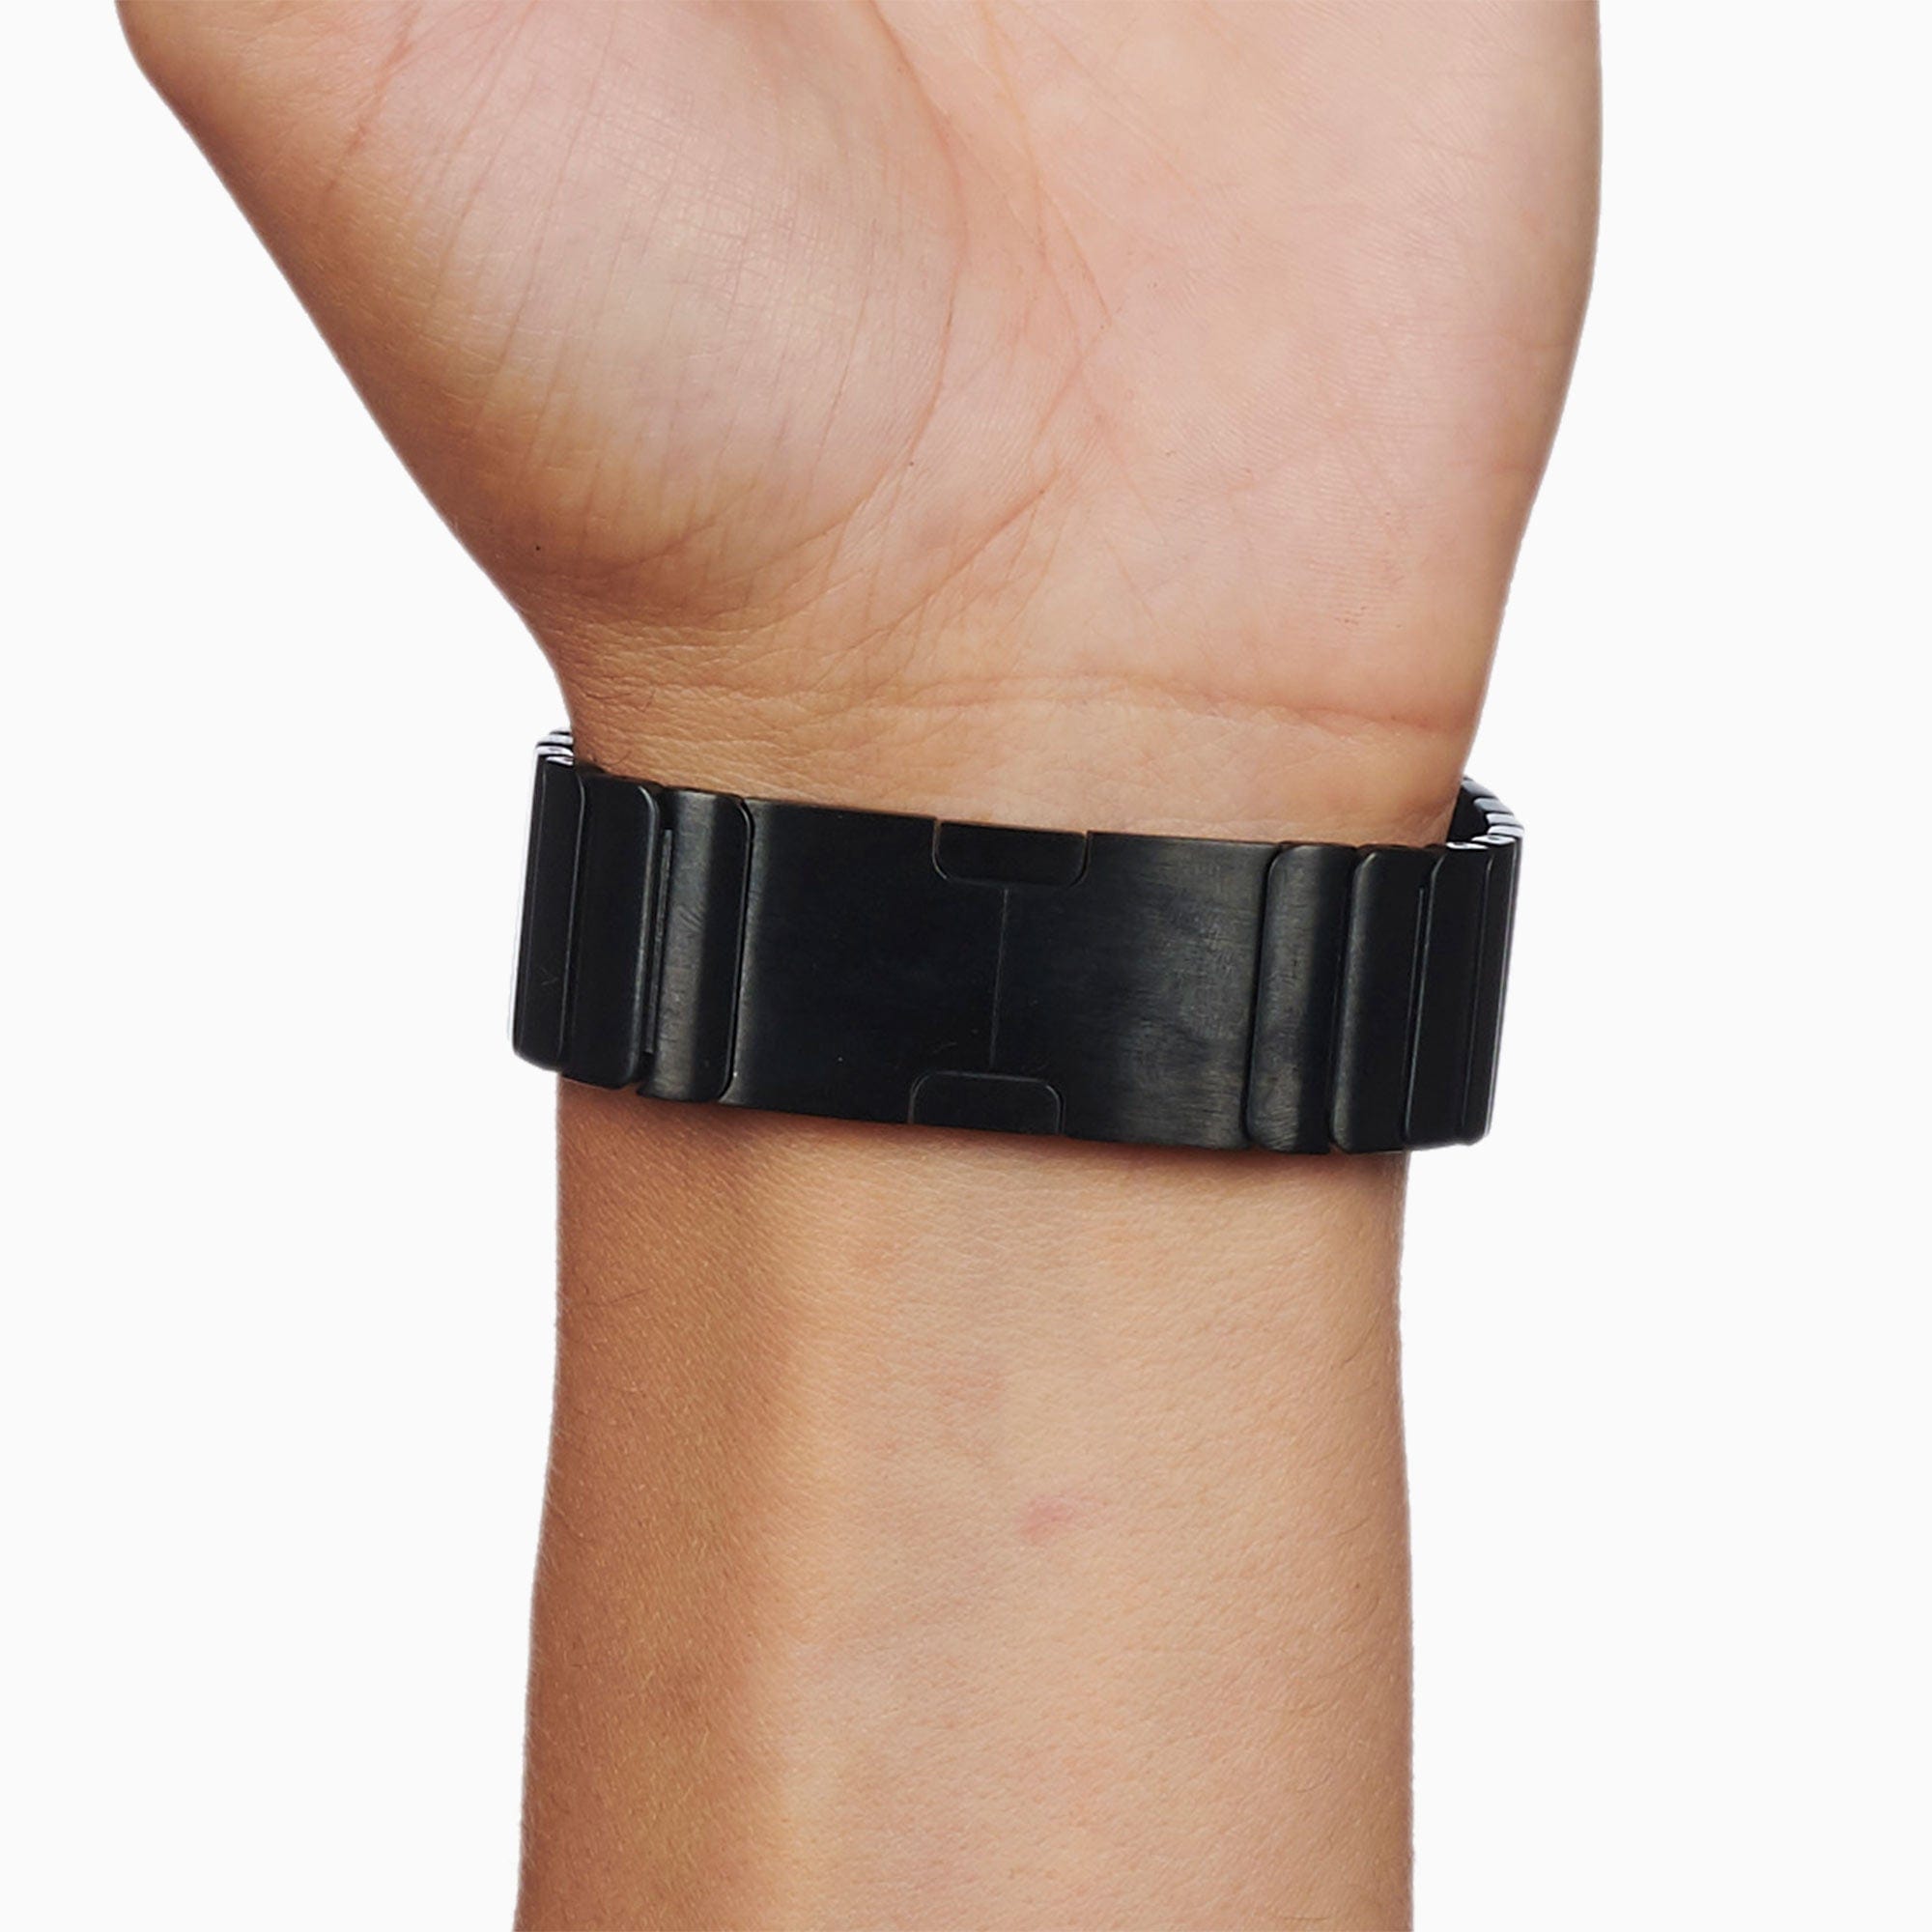 Space Black Link Bracelet Band Strap for Apple Watch - iSTRAP